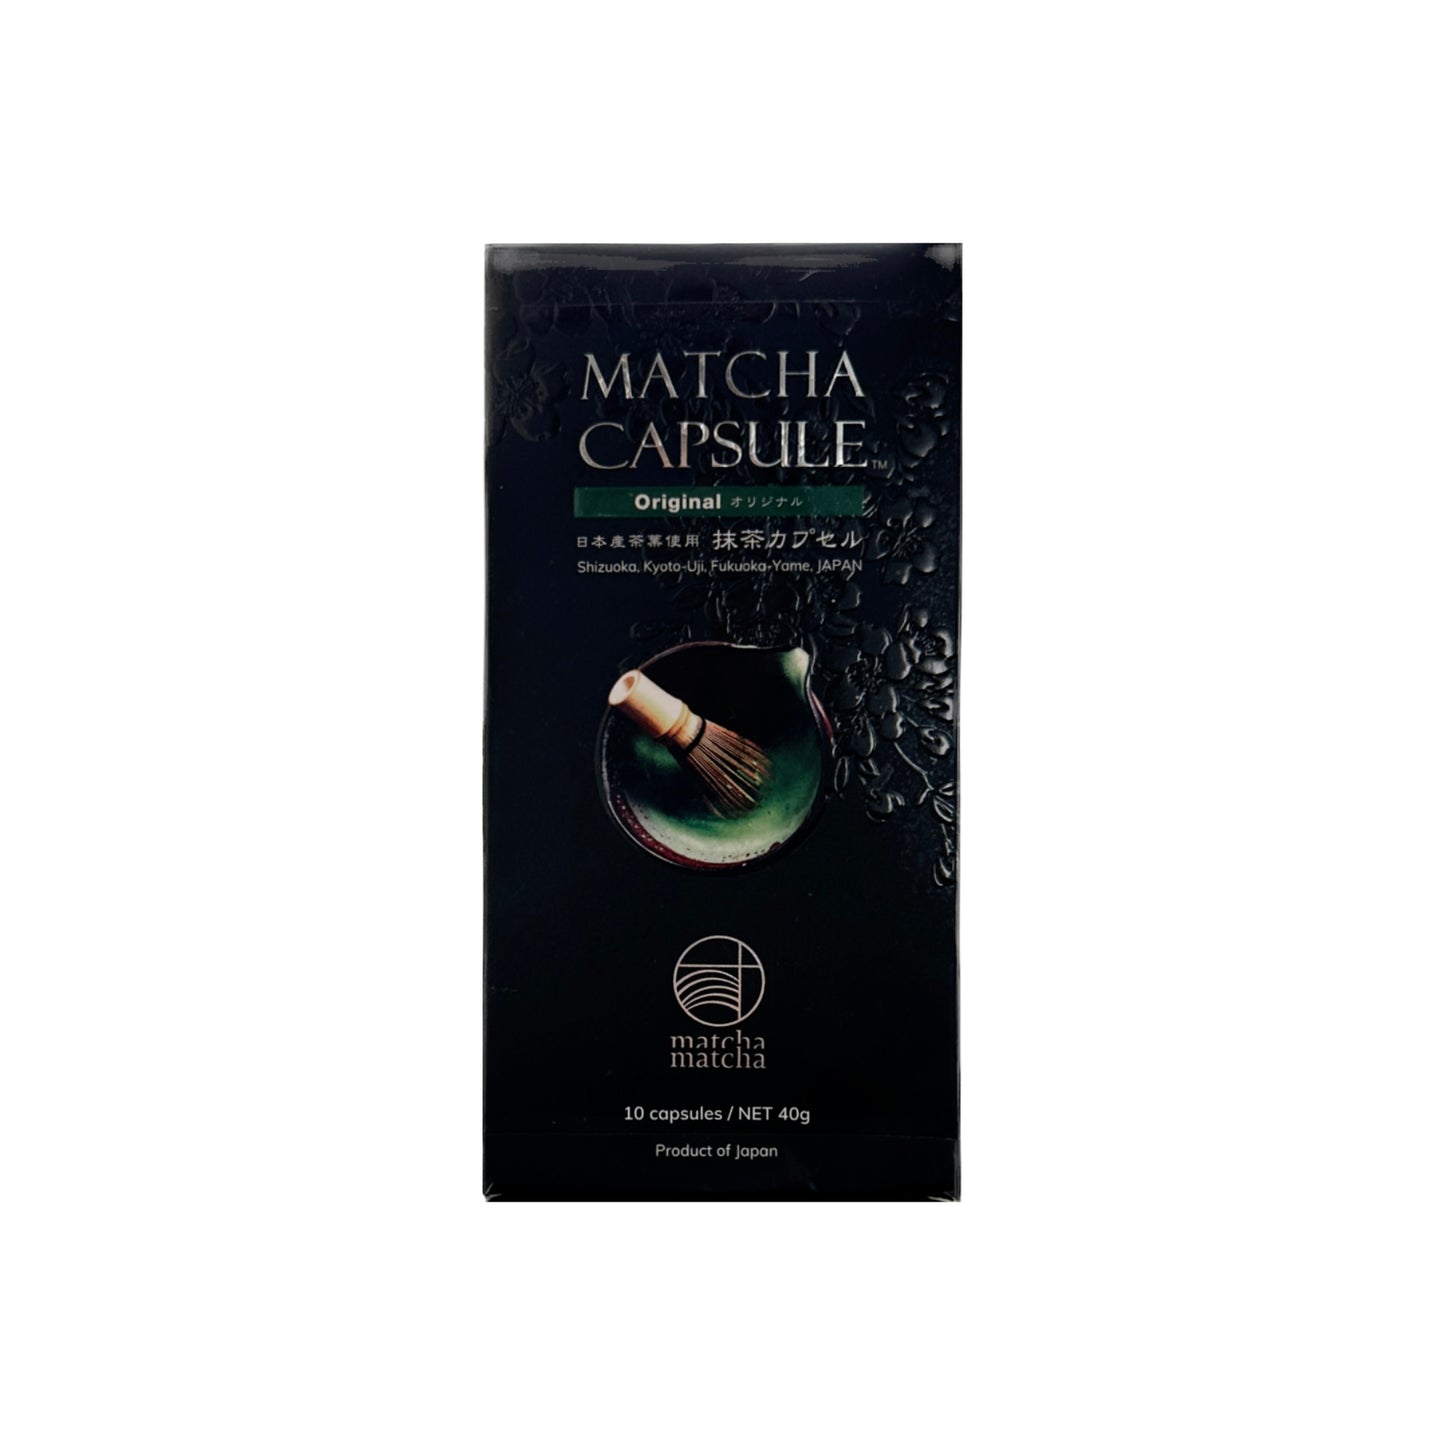 World's first Matcha Nespresso Compatible Capsule